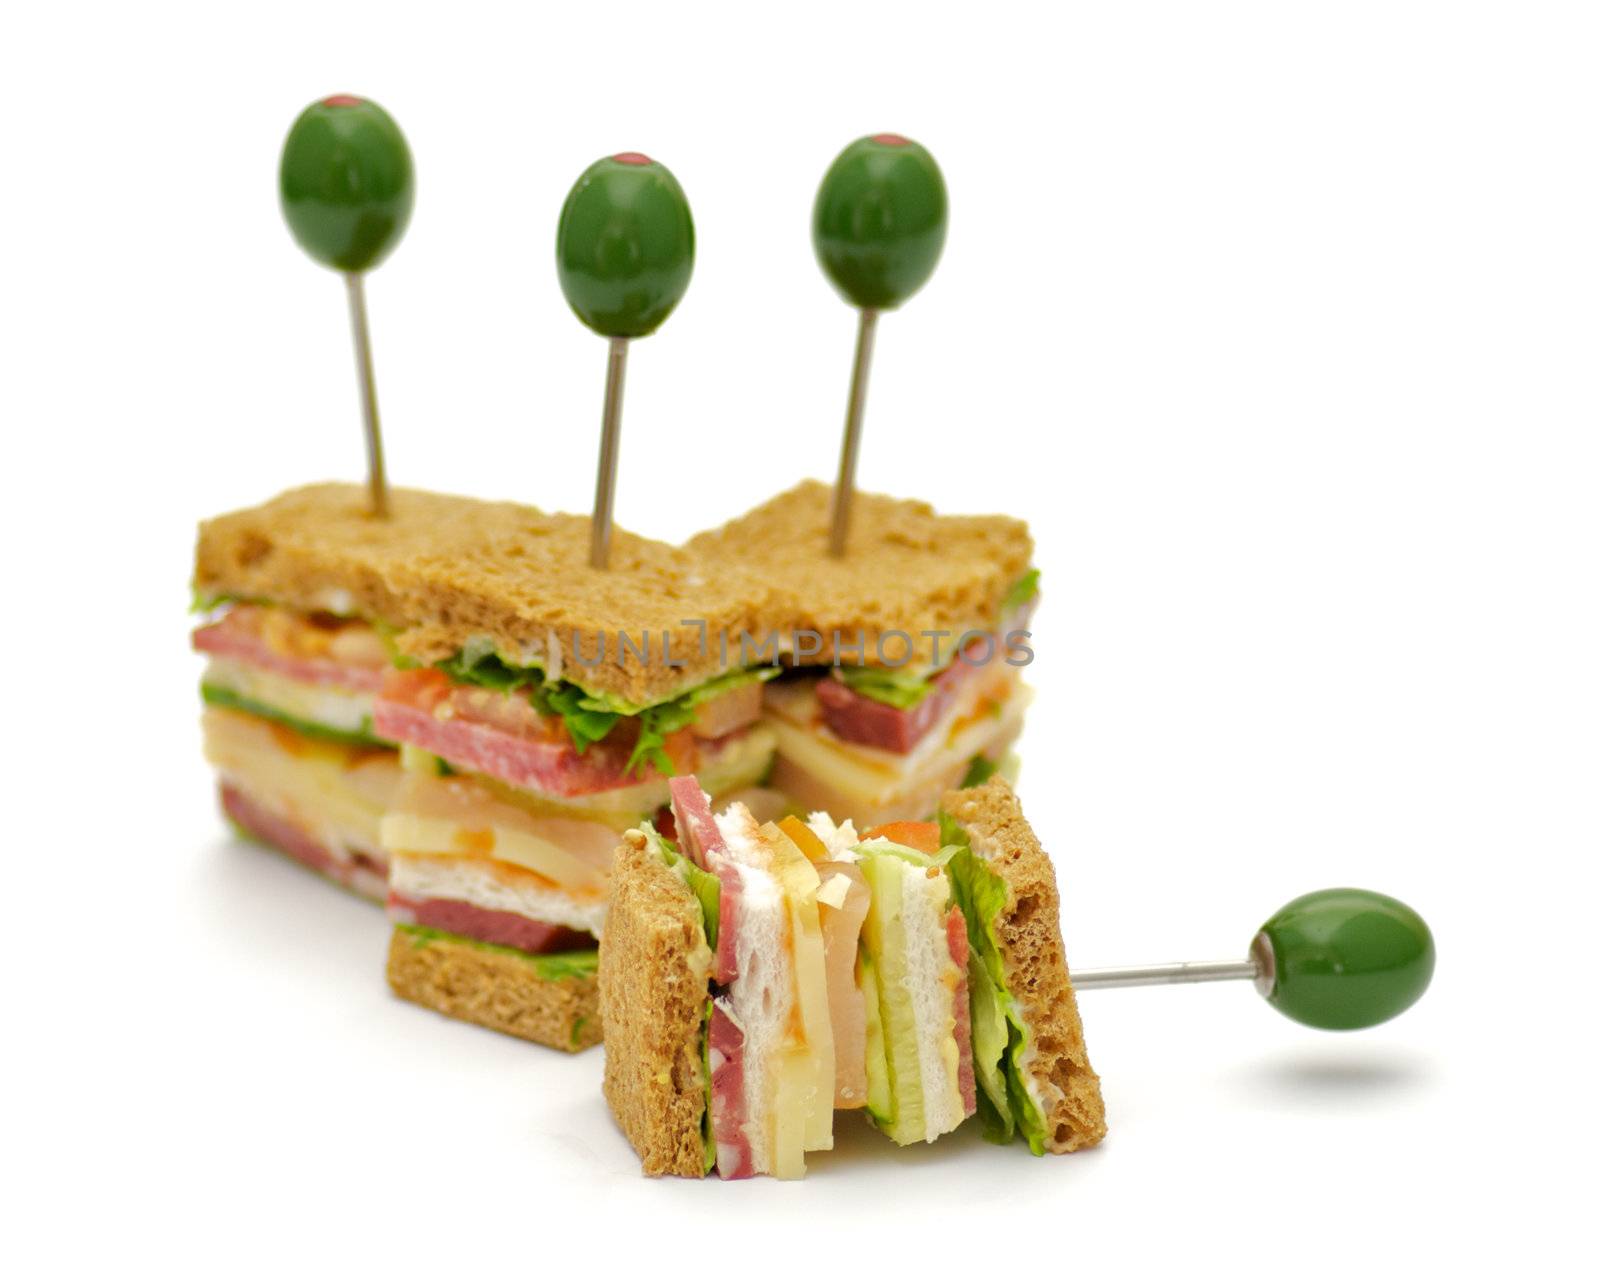 Snacks of Classical BLT Club Sandwich by zhekos